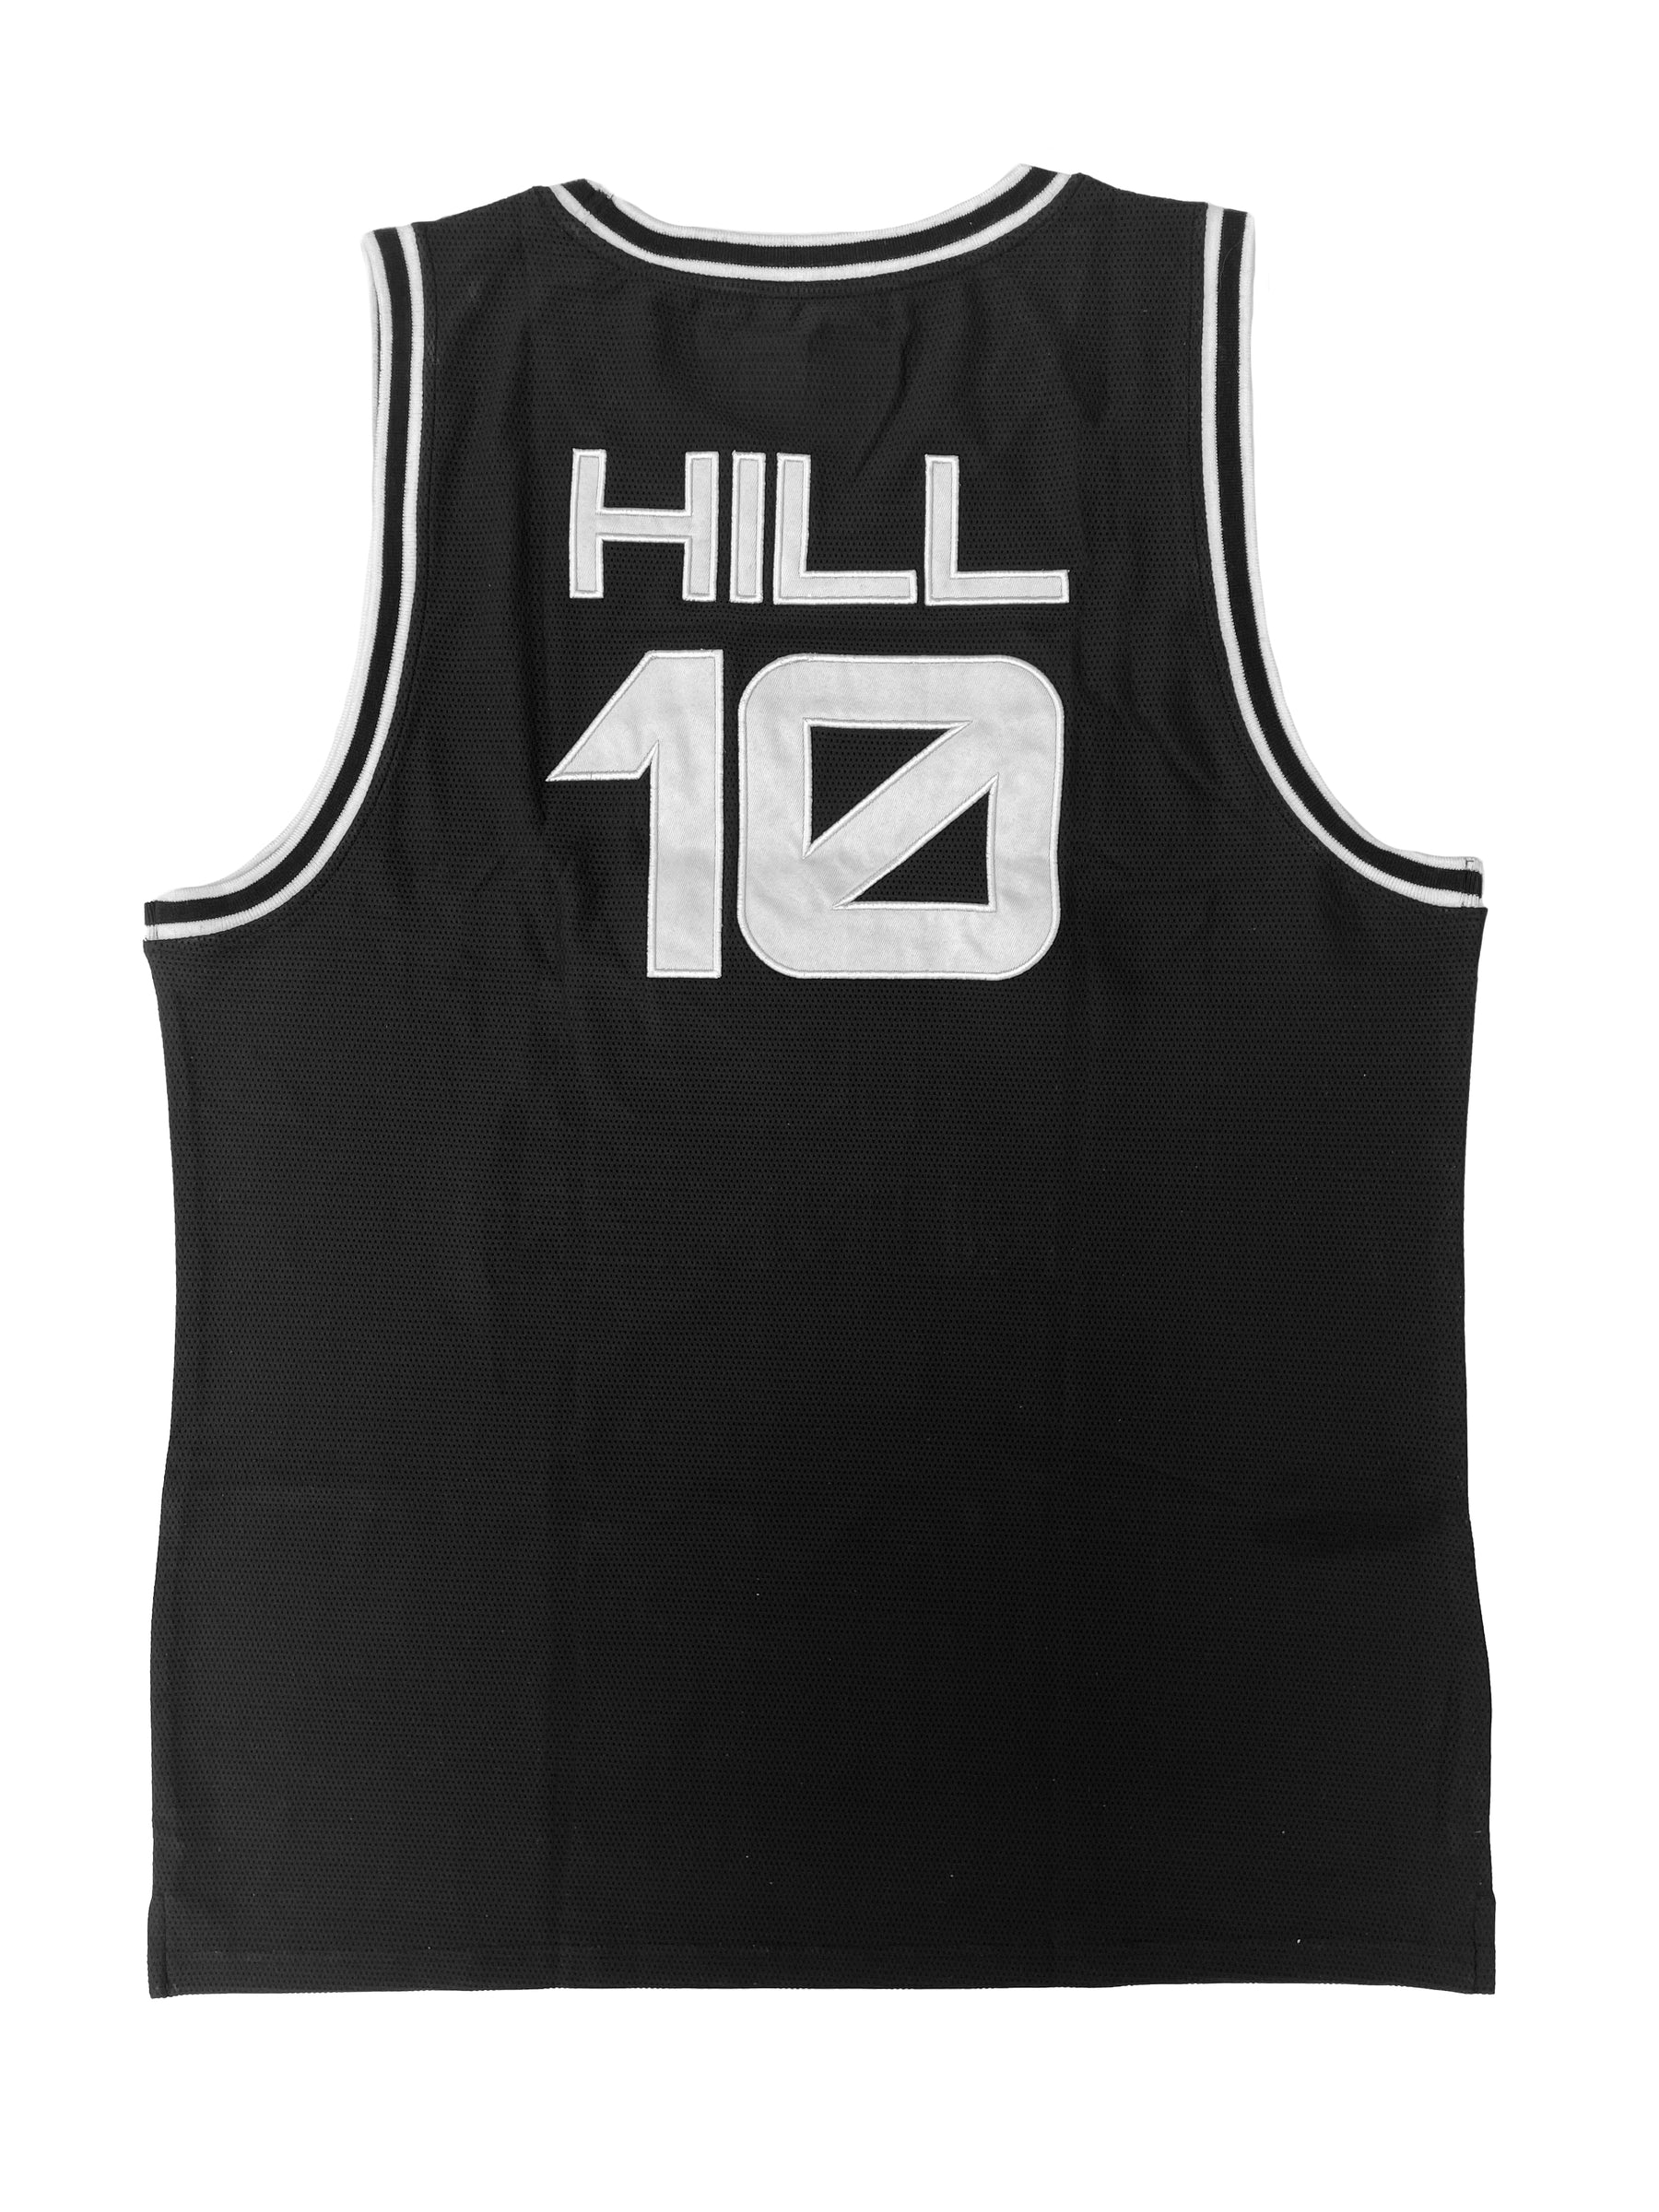 Tyreek Hill SR Basketball Jersey [Limited Edition]